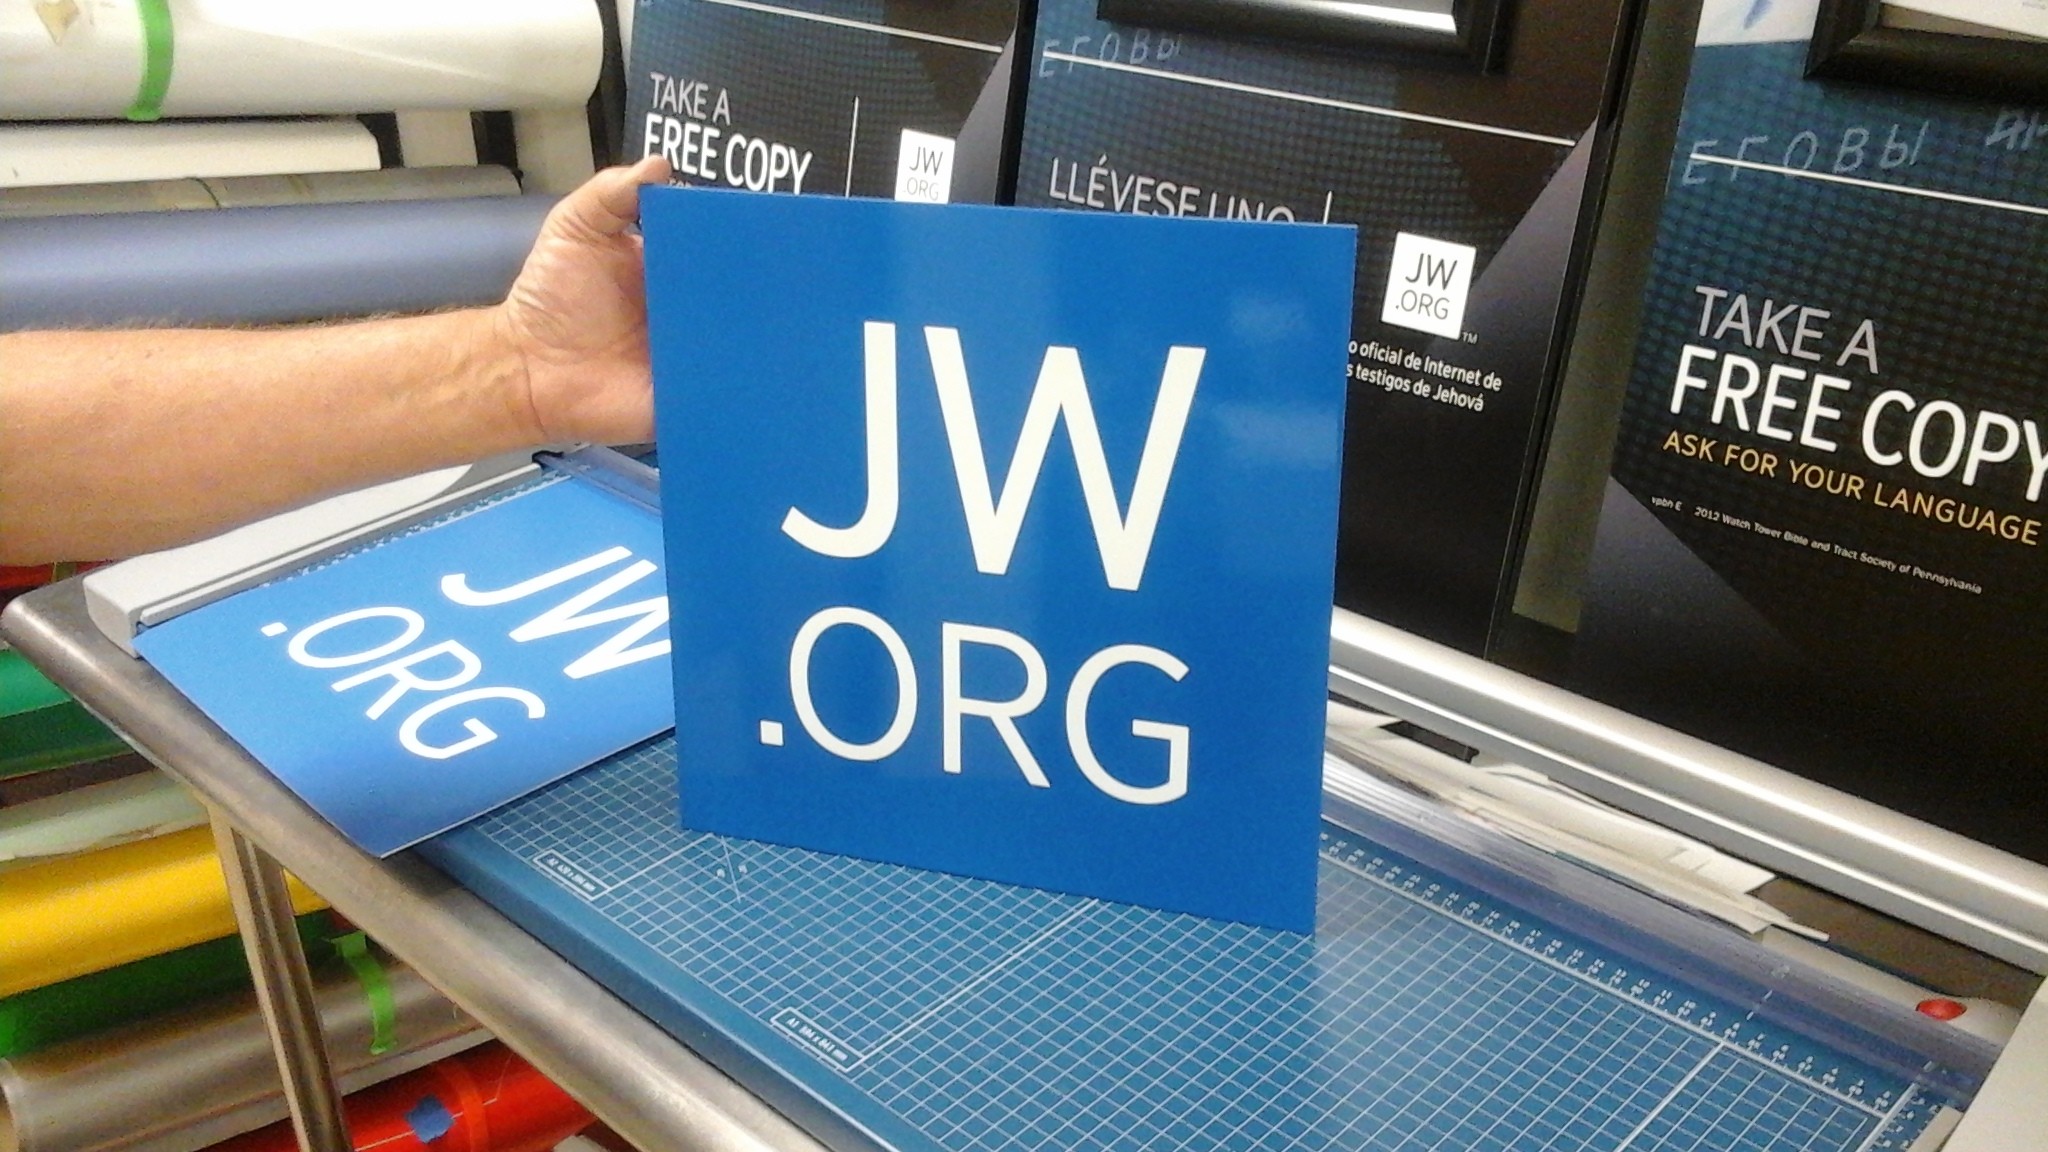 2048x1152 jw.org signs